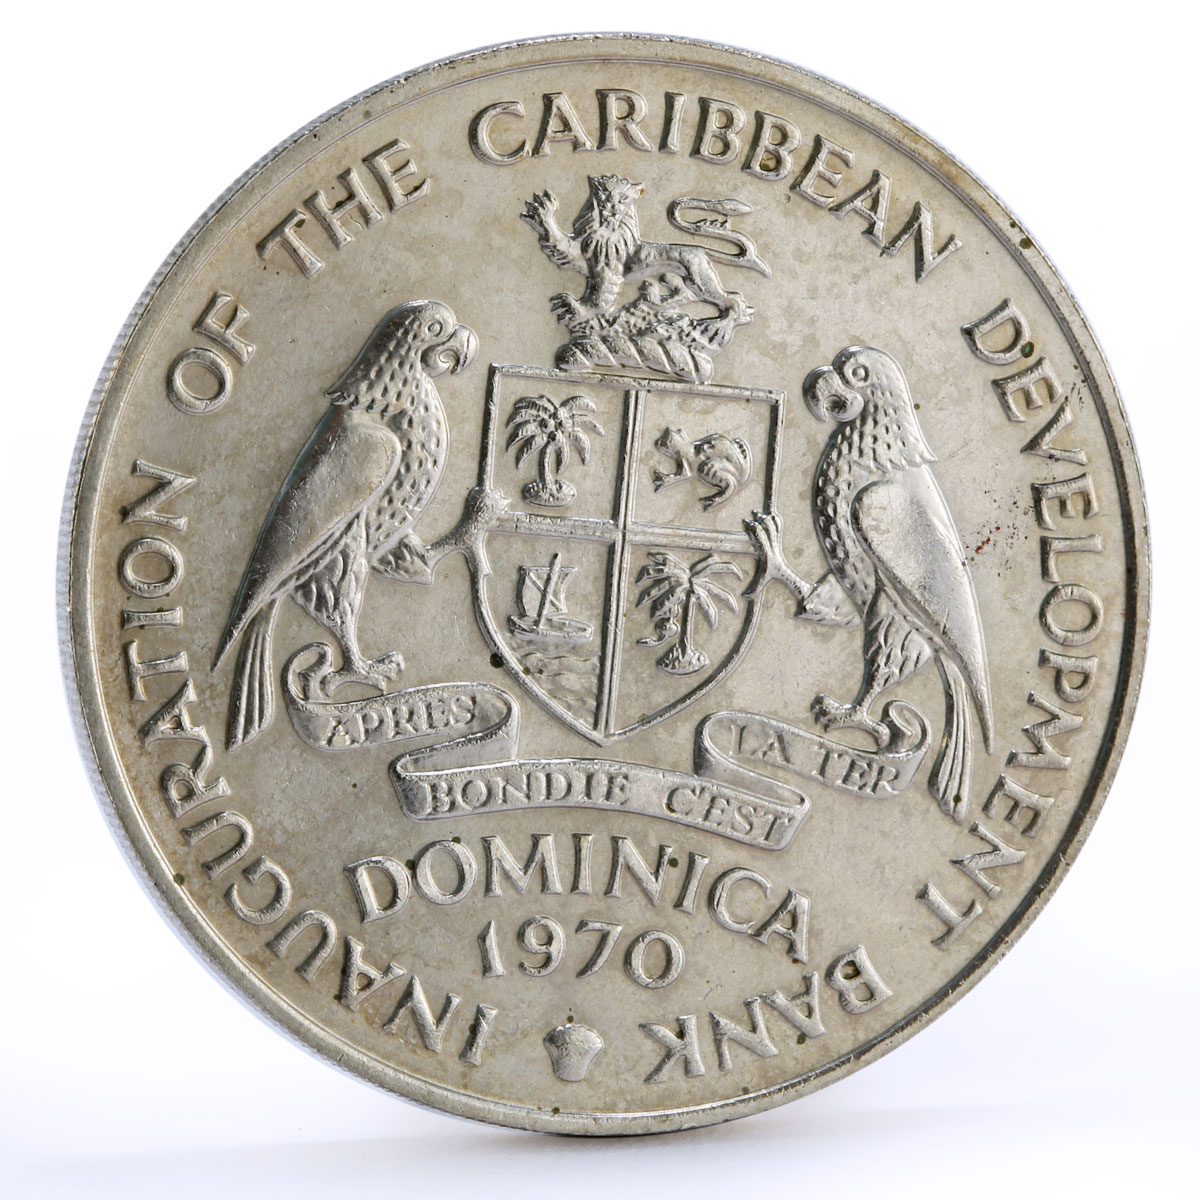 Dominica 4 dollars FAO Food Sugar Bananas Feed the Mankind CuNi coin 1970